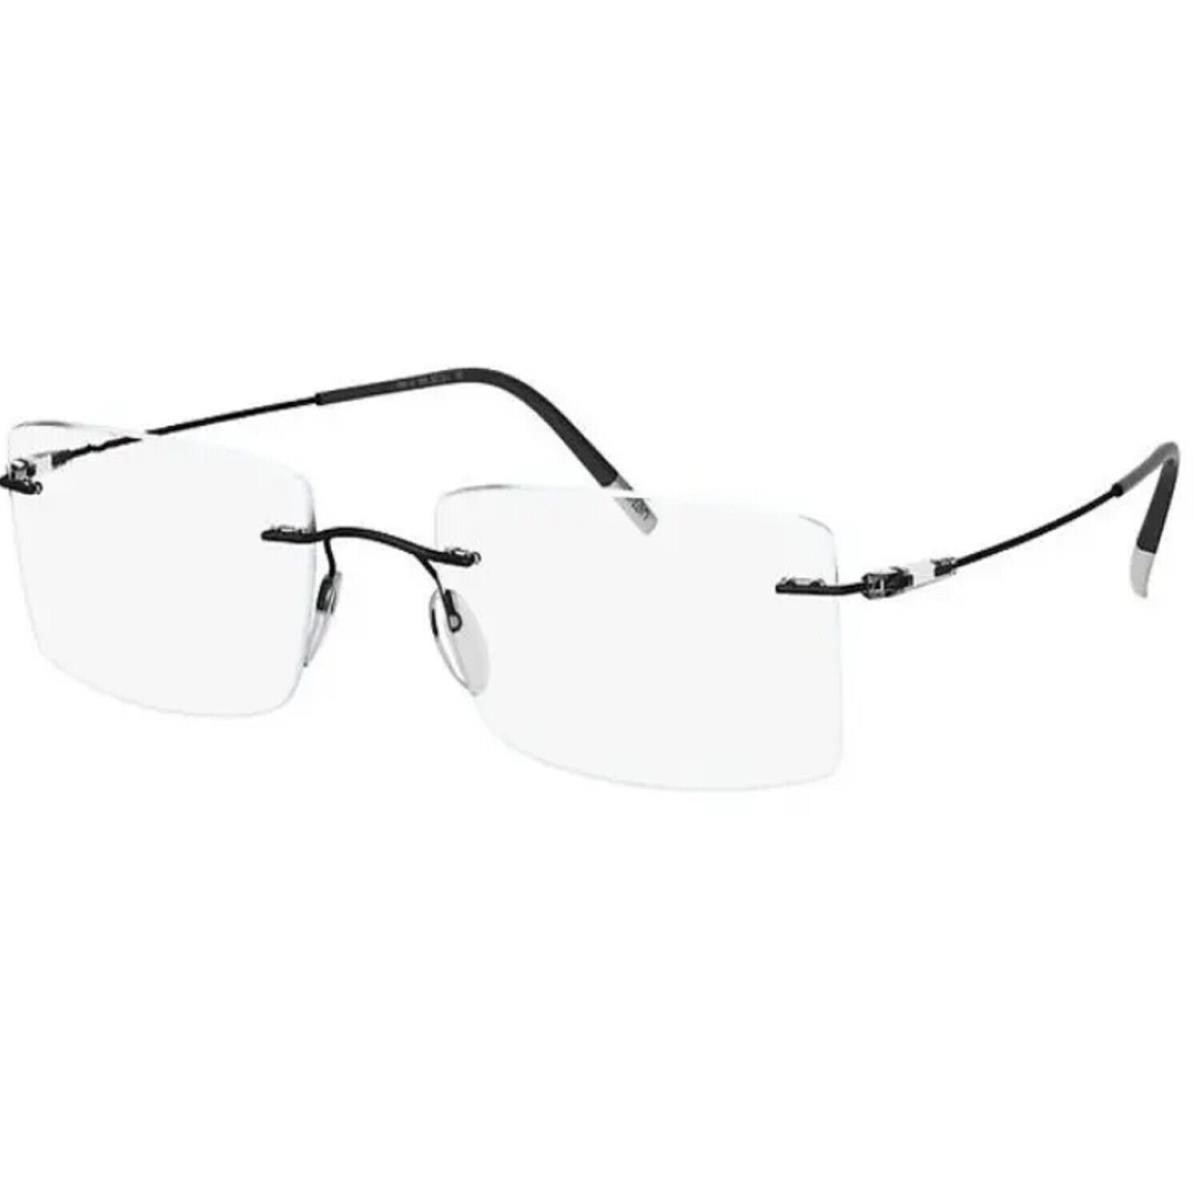 Silhouette Eyeglasses Dynamics Colorwave 56/21/150 Coral 5500/BH-9140